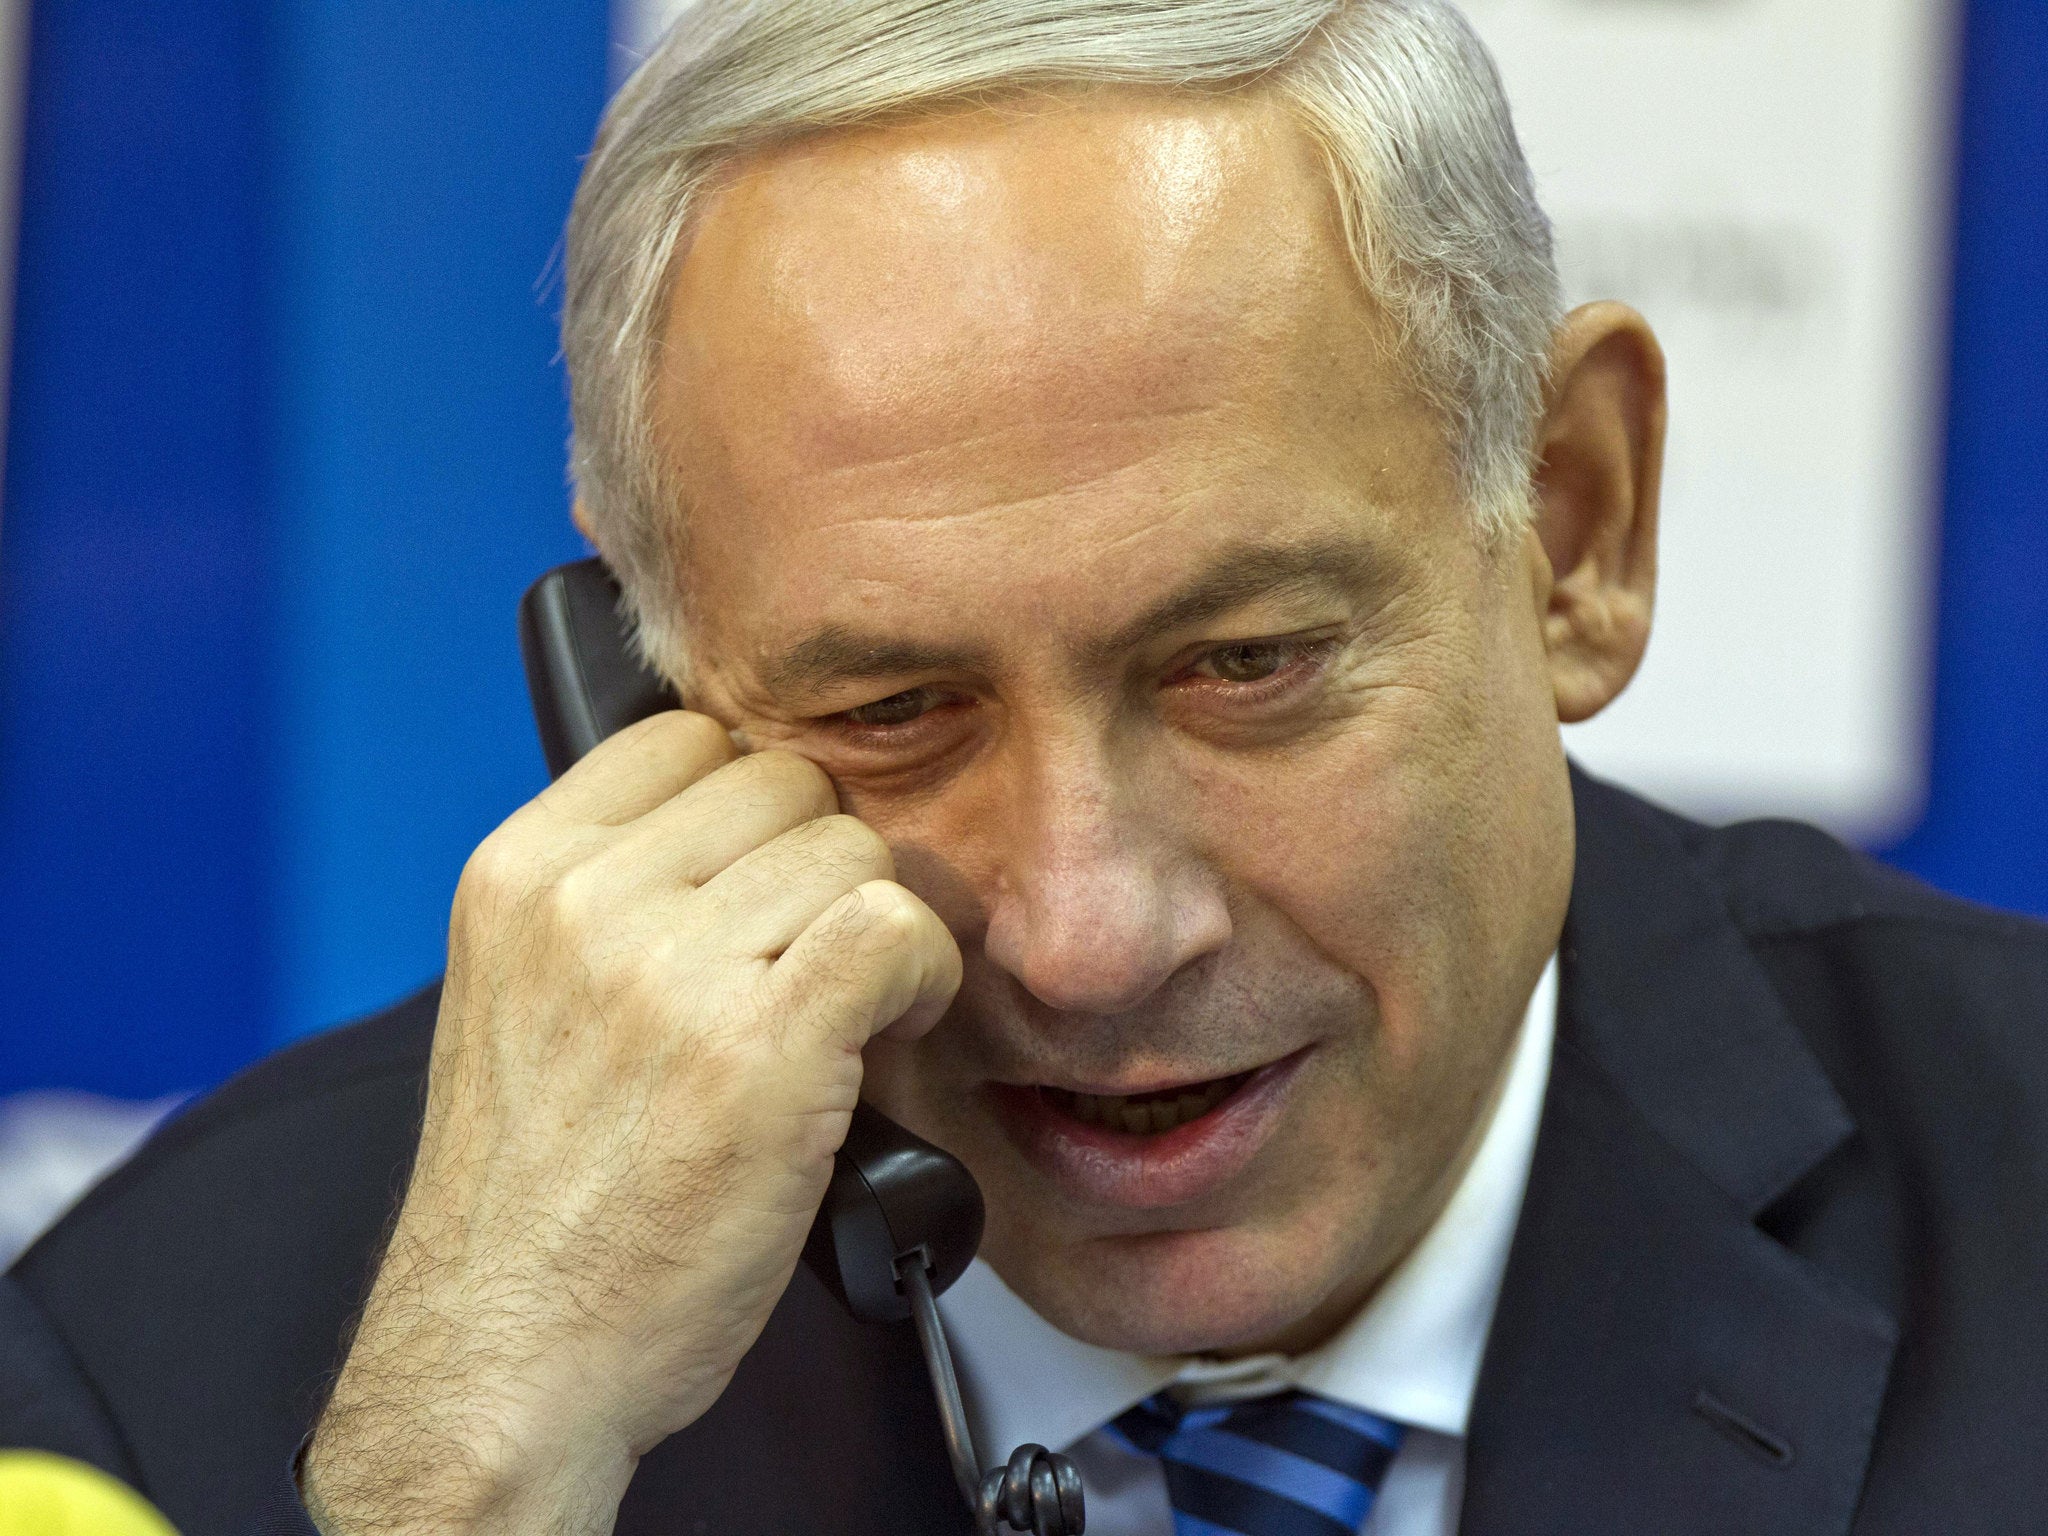 Benjamin Netanyahu reportedly said Israel wants peace but will ensure regional 'stability'